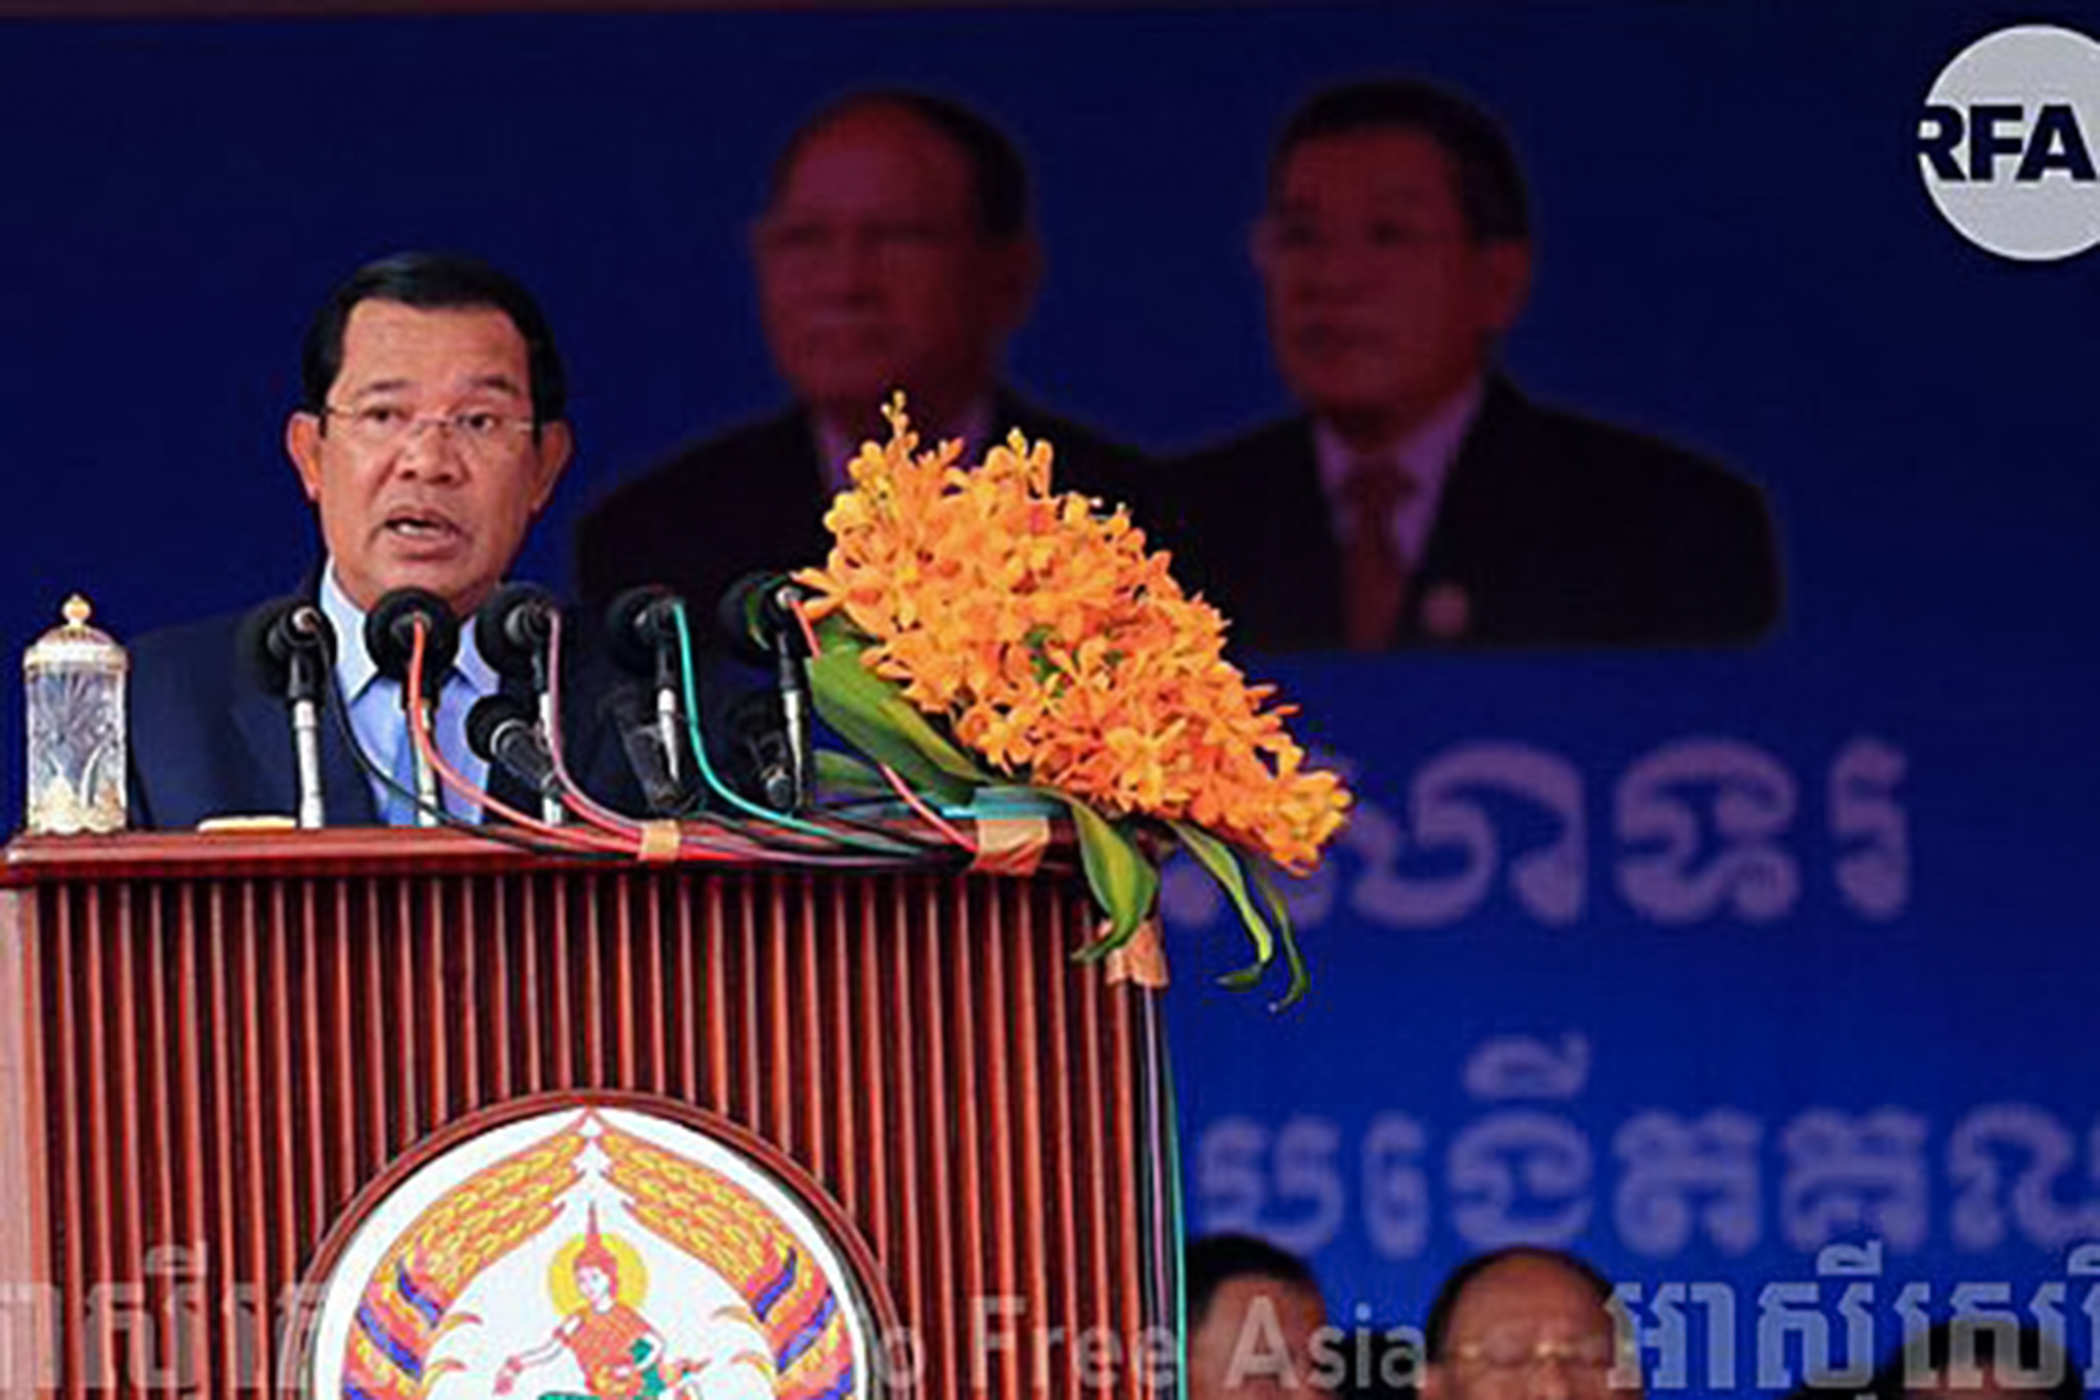 CEO statement on the closing of RFA’s Phnom Penh Bureau